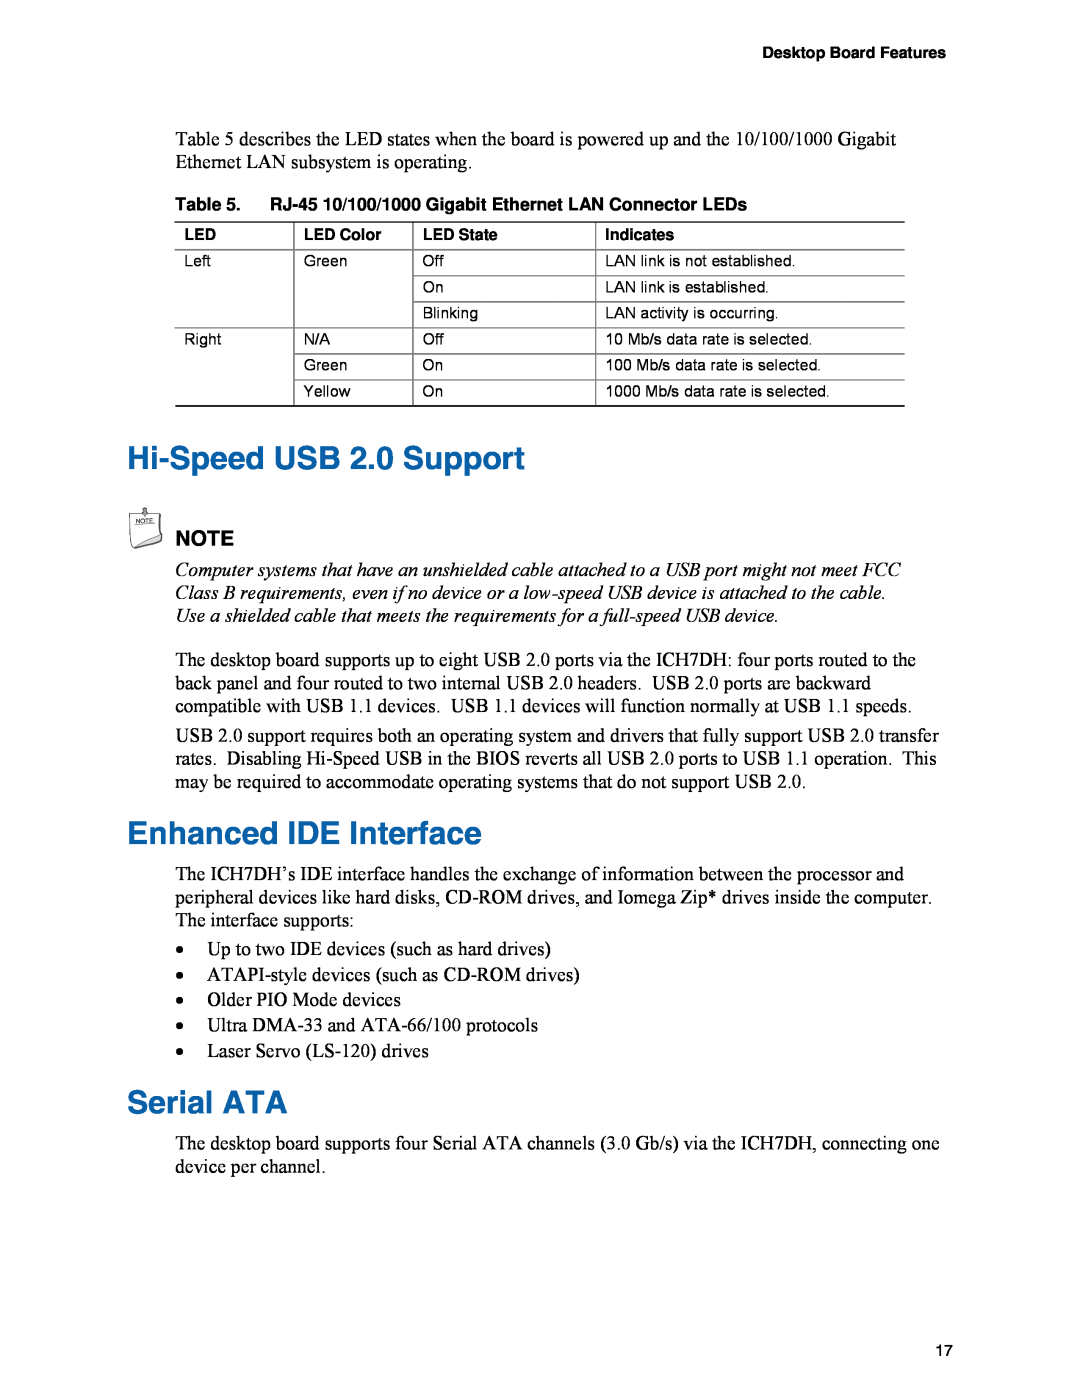 Intel D945GPM manual Hi-Speed USB 2.0 Support, Enhanced IDE Interface, Serial ATA 